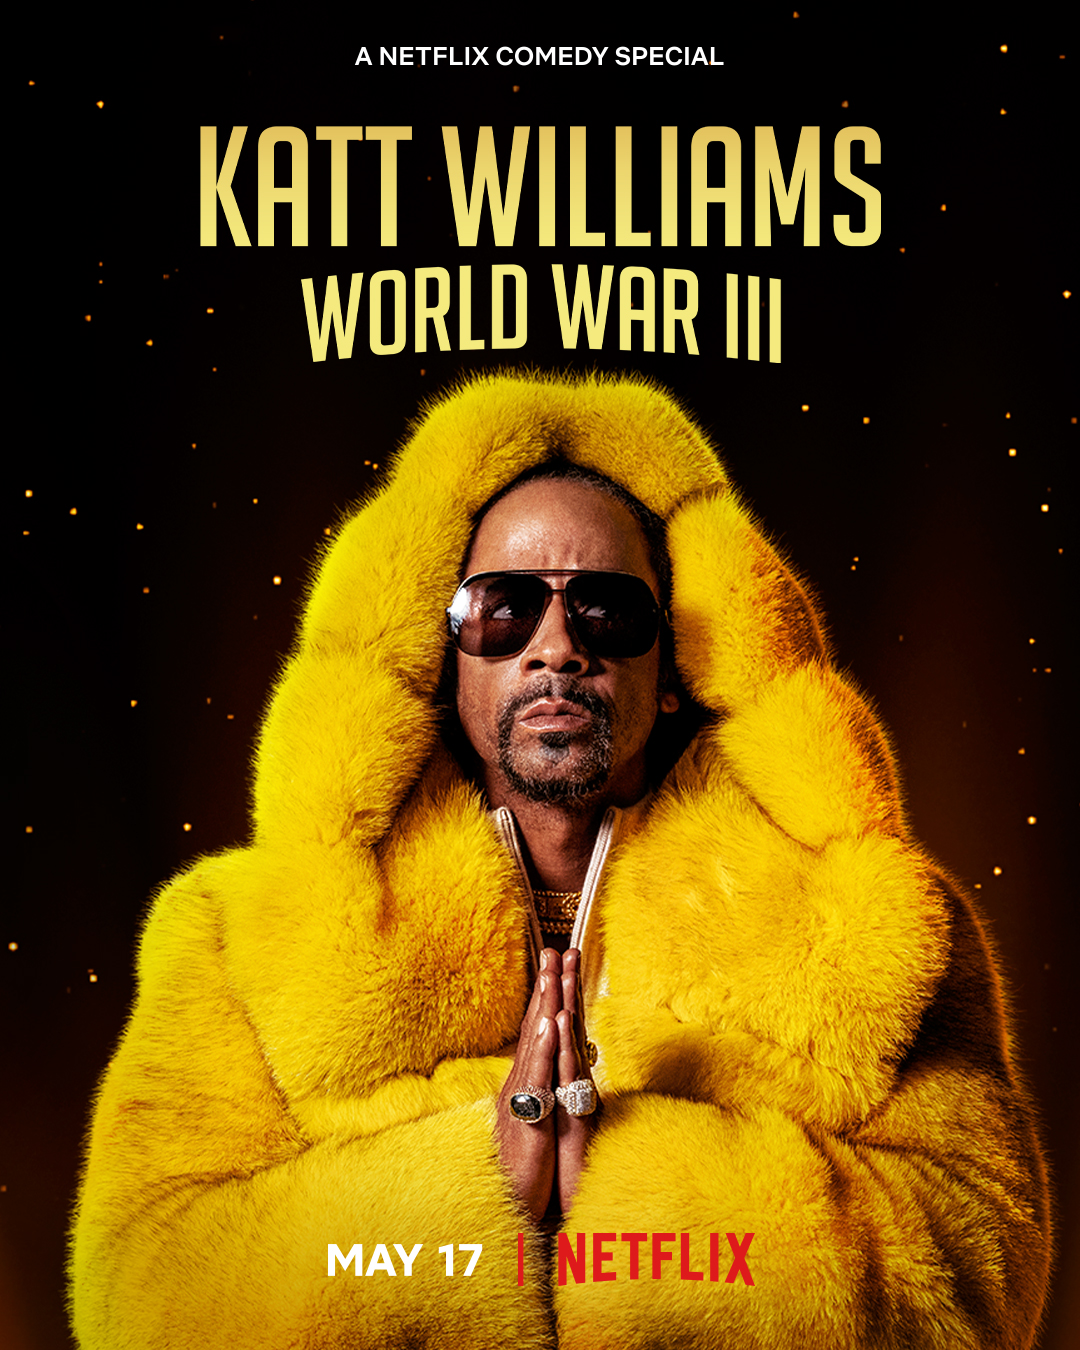 Netflix Comedy Special: Katt Williams World War III